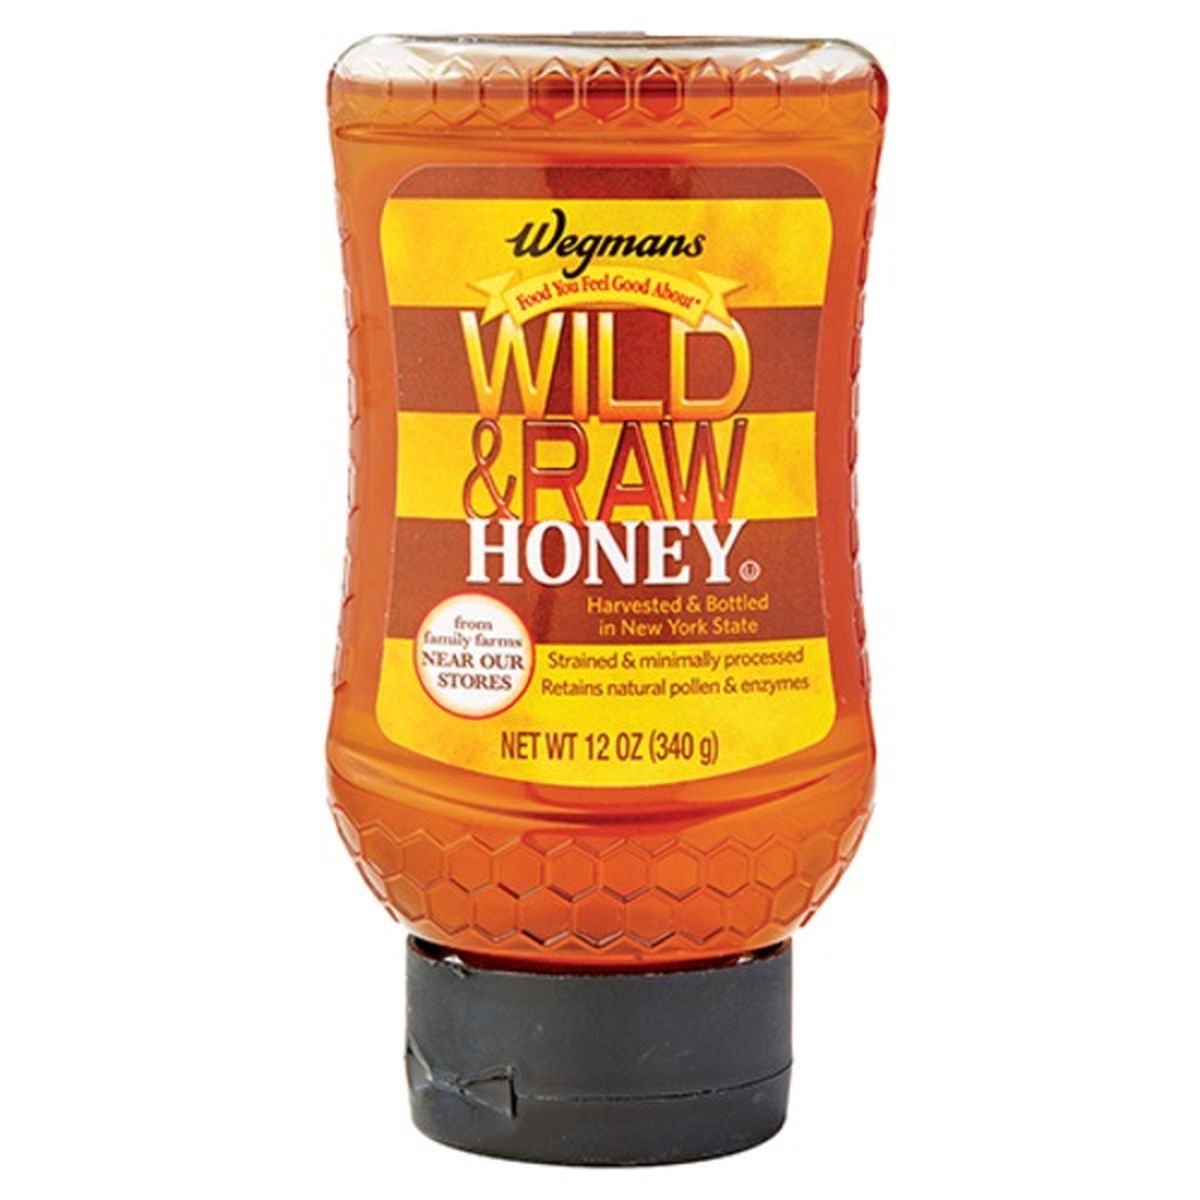 Calories in Wegmans Wild & Raw Honey